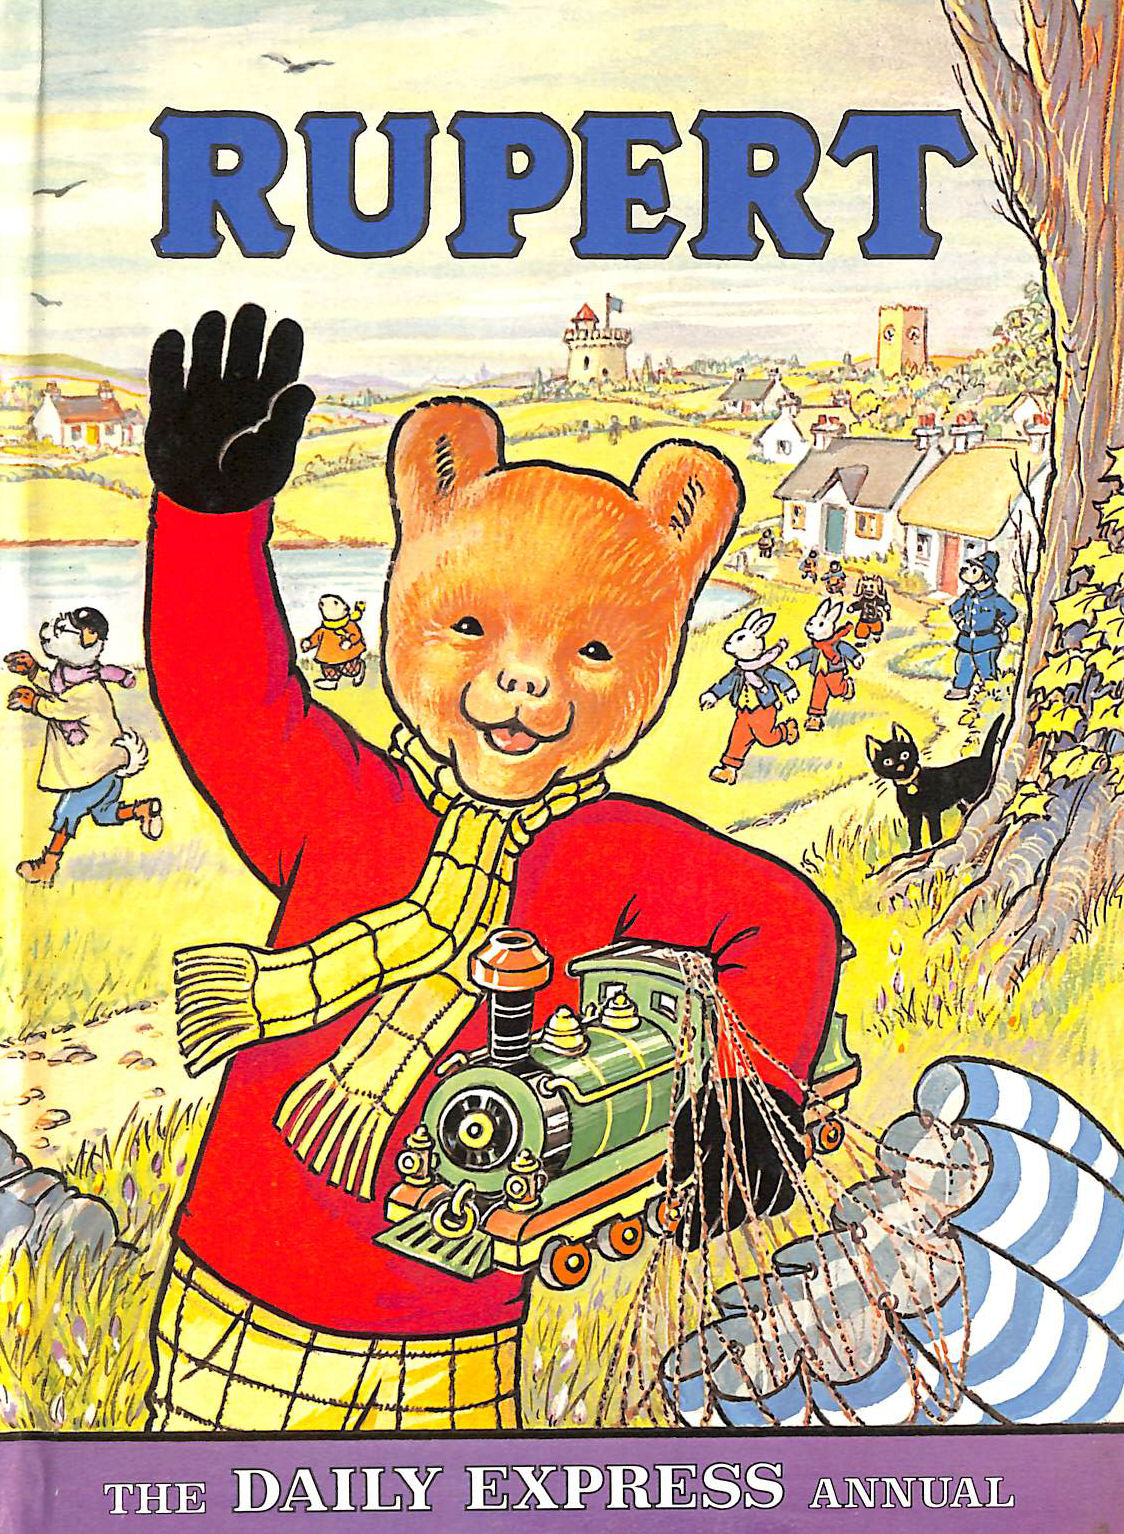 NO AUTHOR. - Rupert : A Daily Express Annual